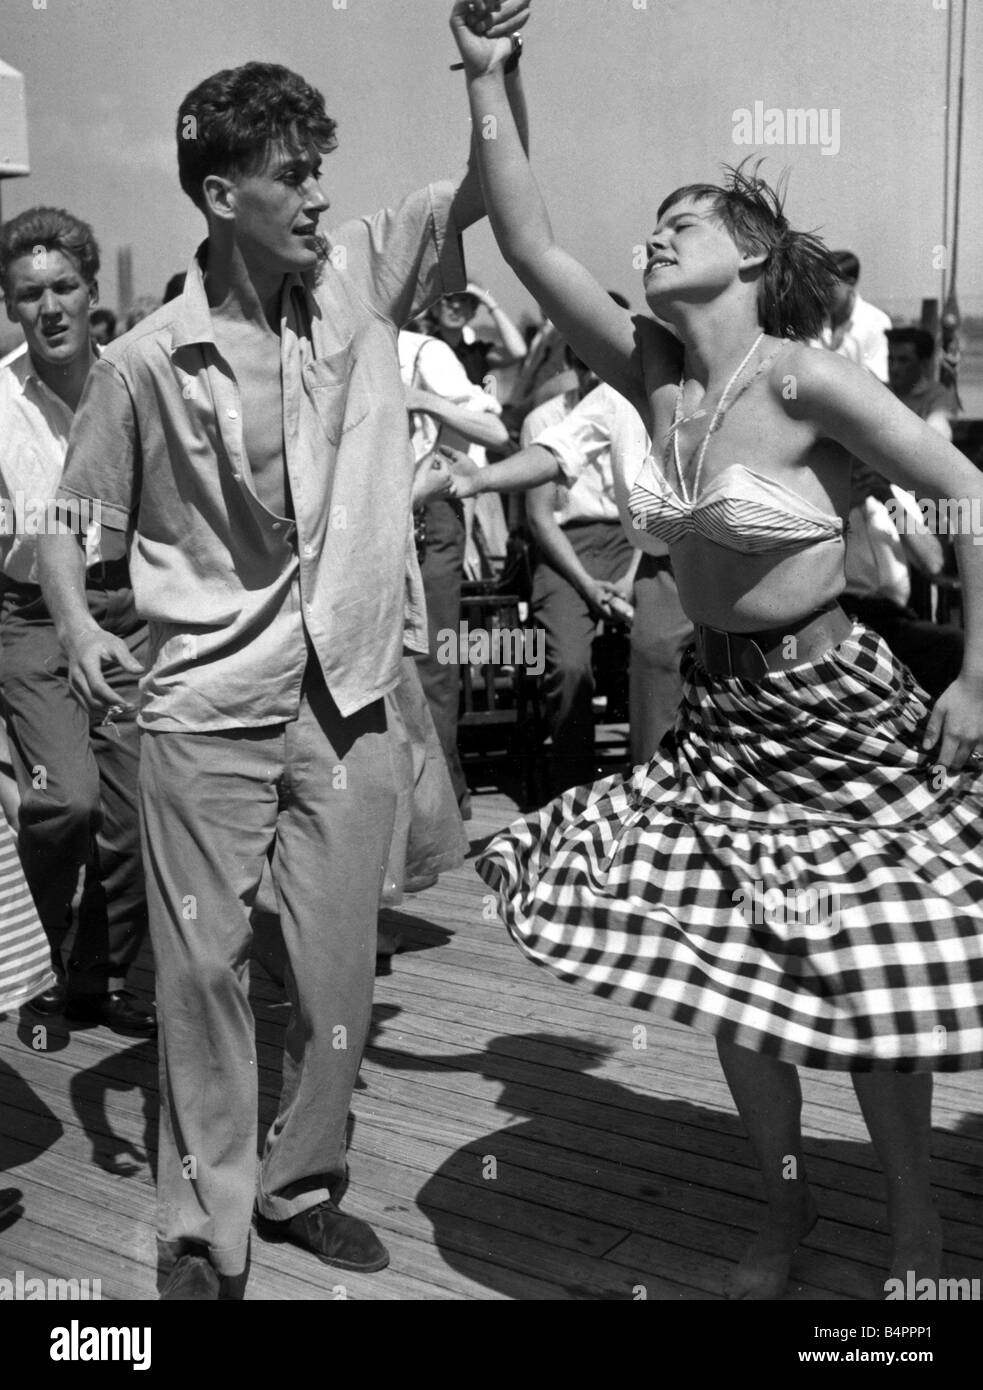 Dancing Rock n Roll circa 1950s Stock Photo - Alamy